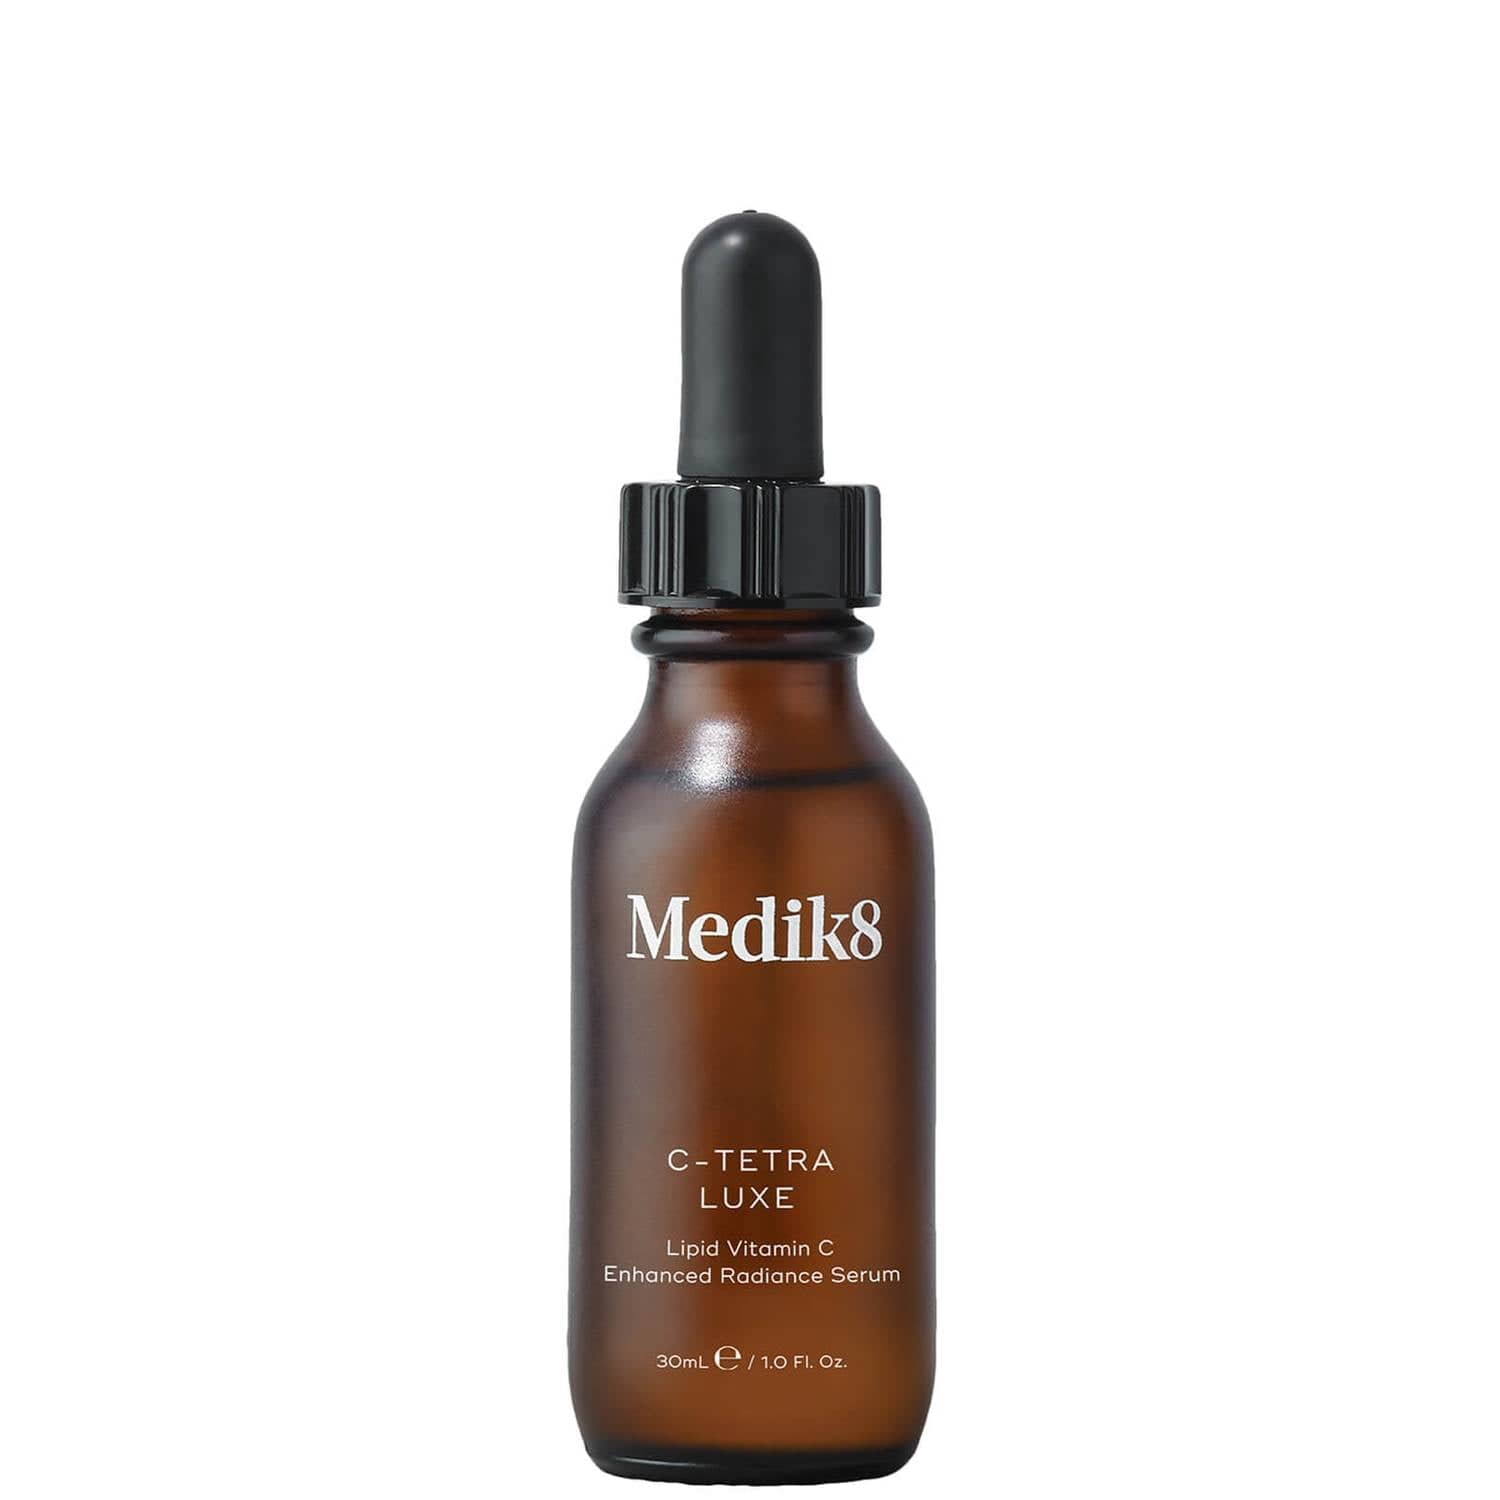 Medik8 Beauty Medik8 C-Tetra Luxe Lipid Vitamin C enhanced Radiance Serum 30ml